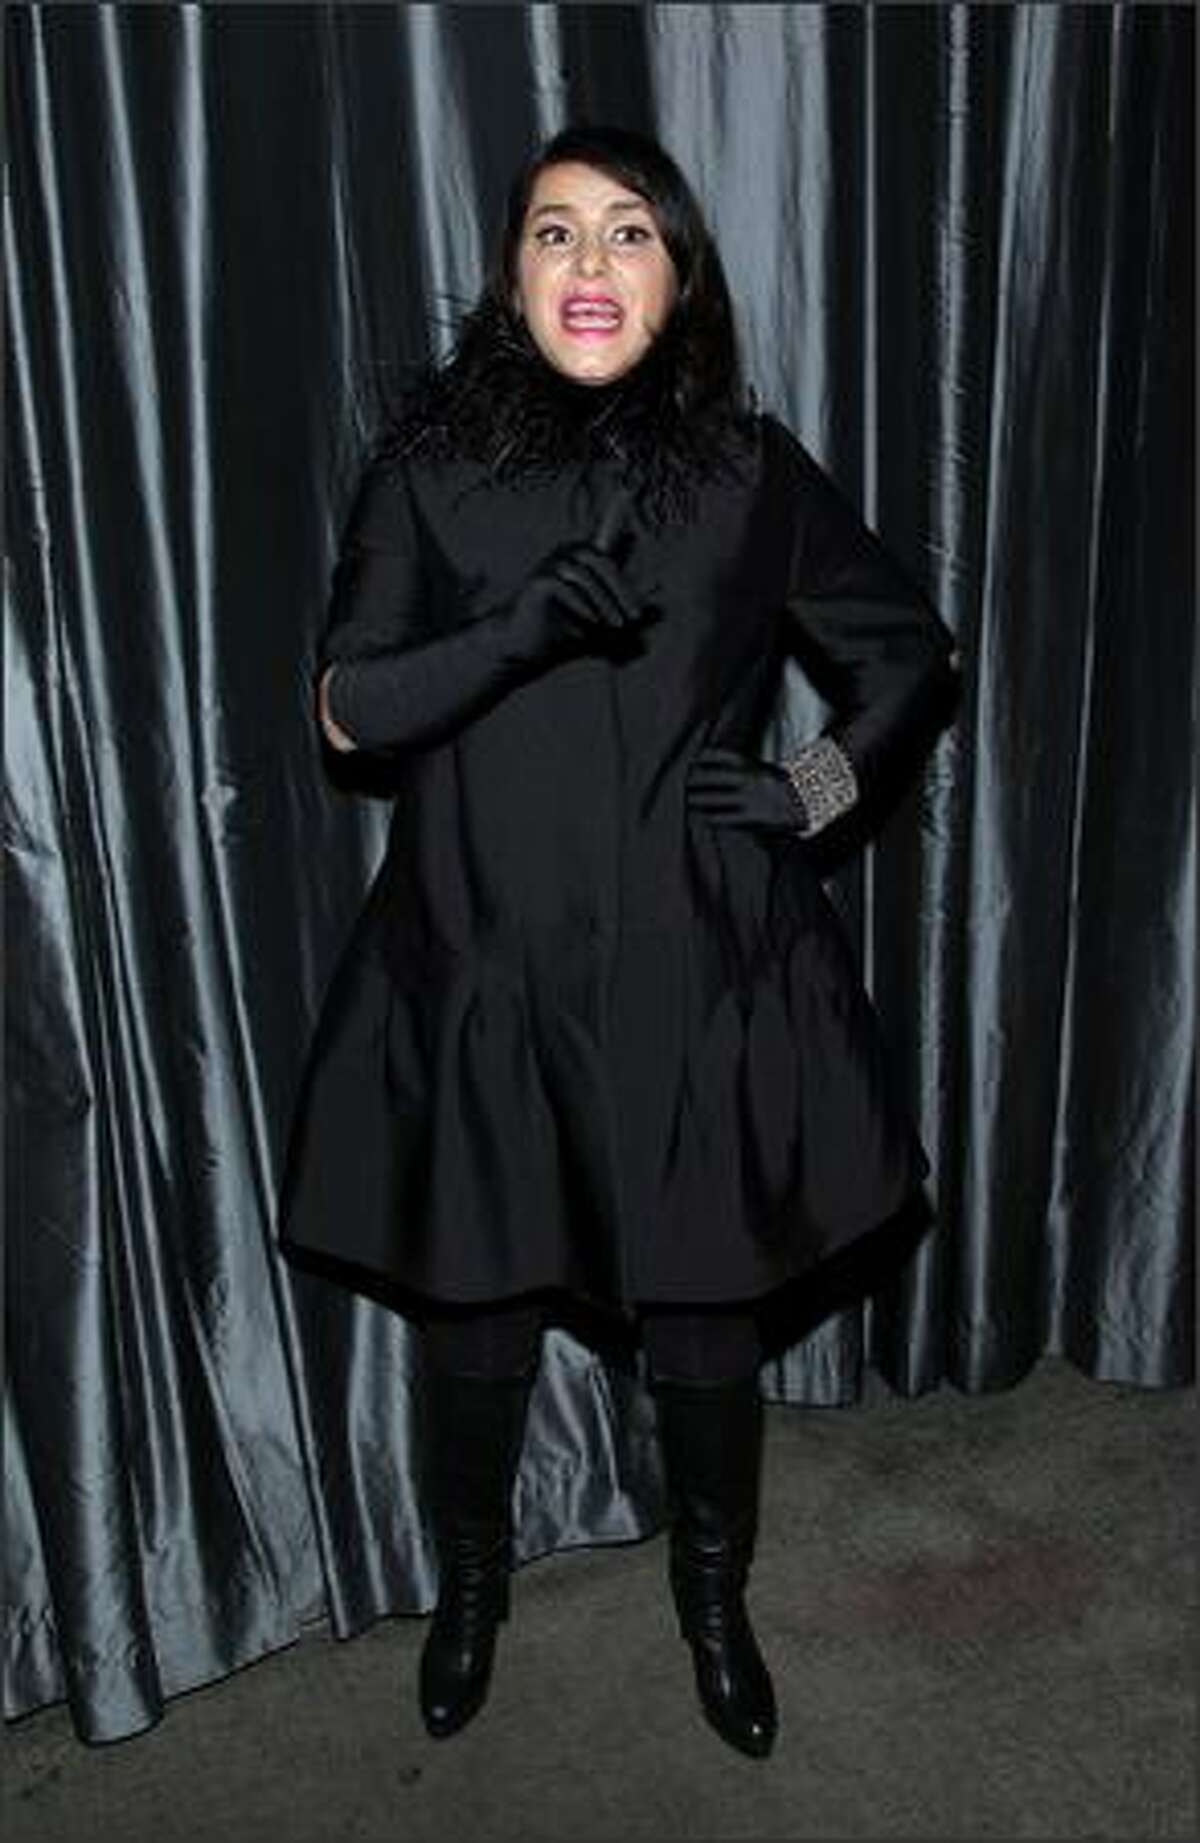 Writer Marjane Satrapi attends the 2007 New York Film Critic's Circle Awards at Spotlight in New York City.